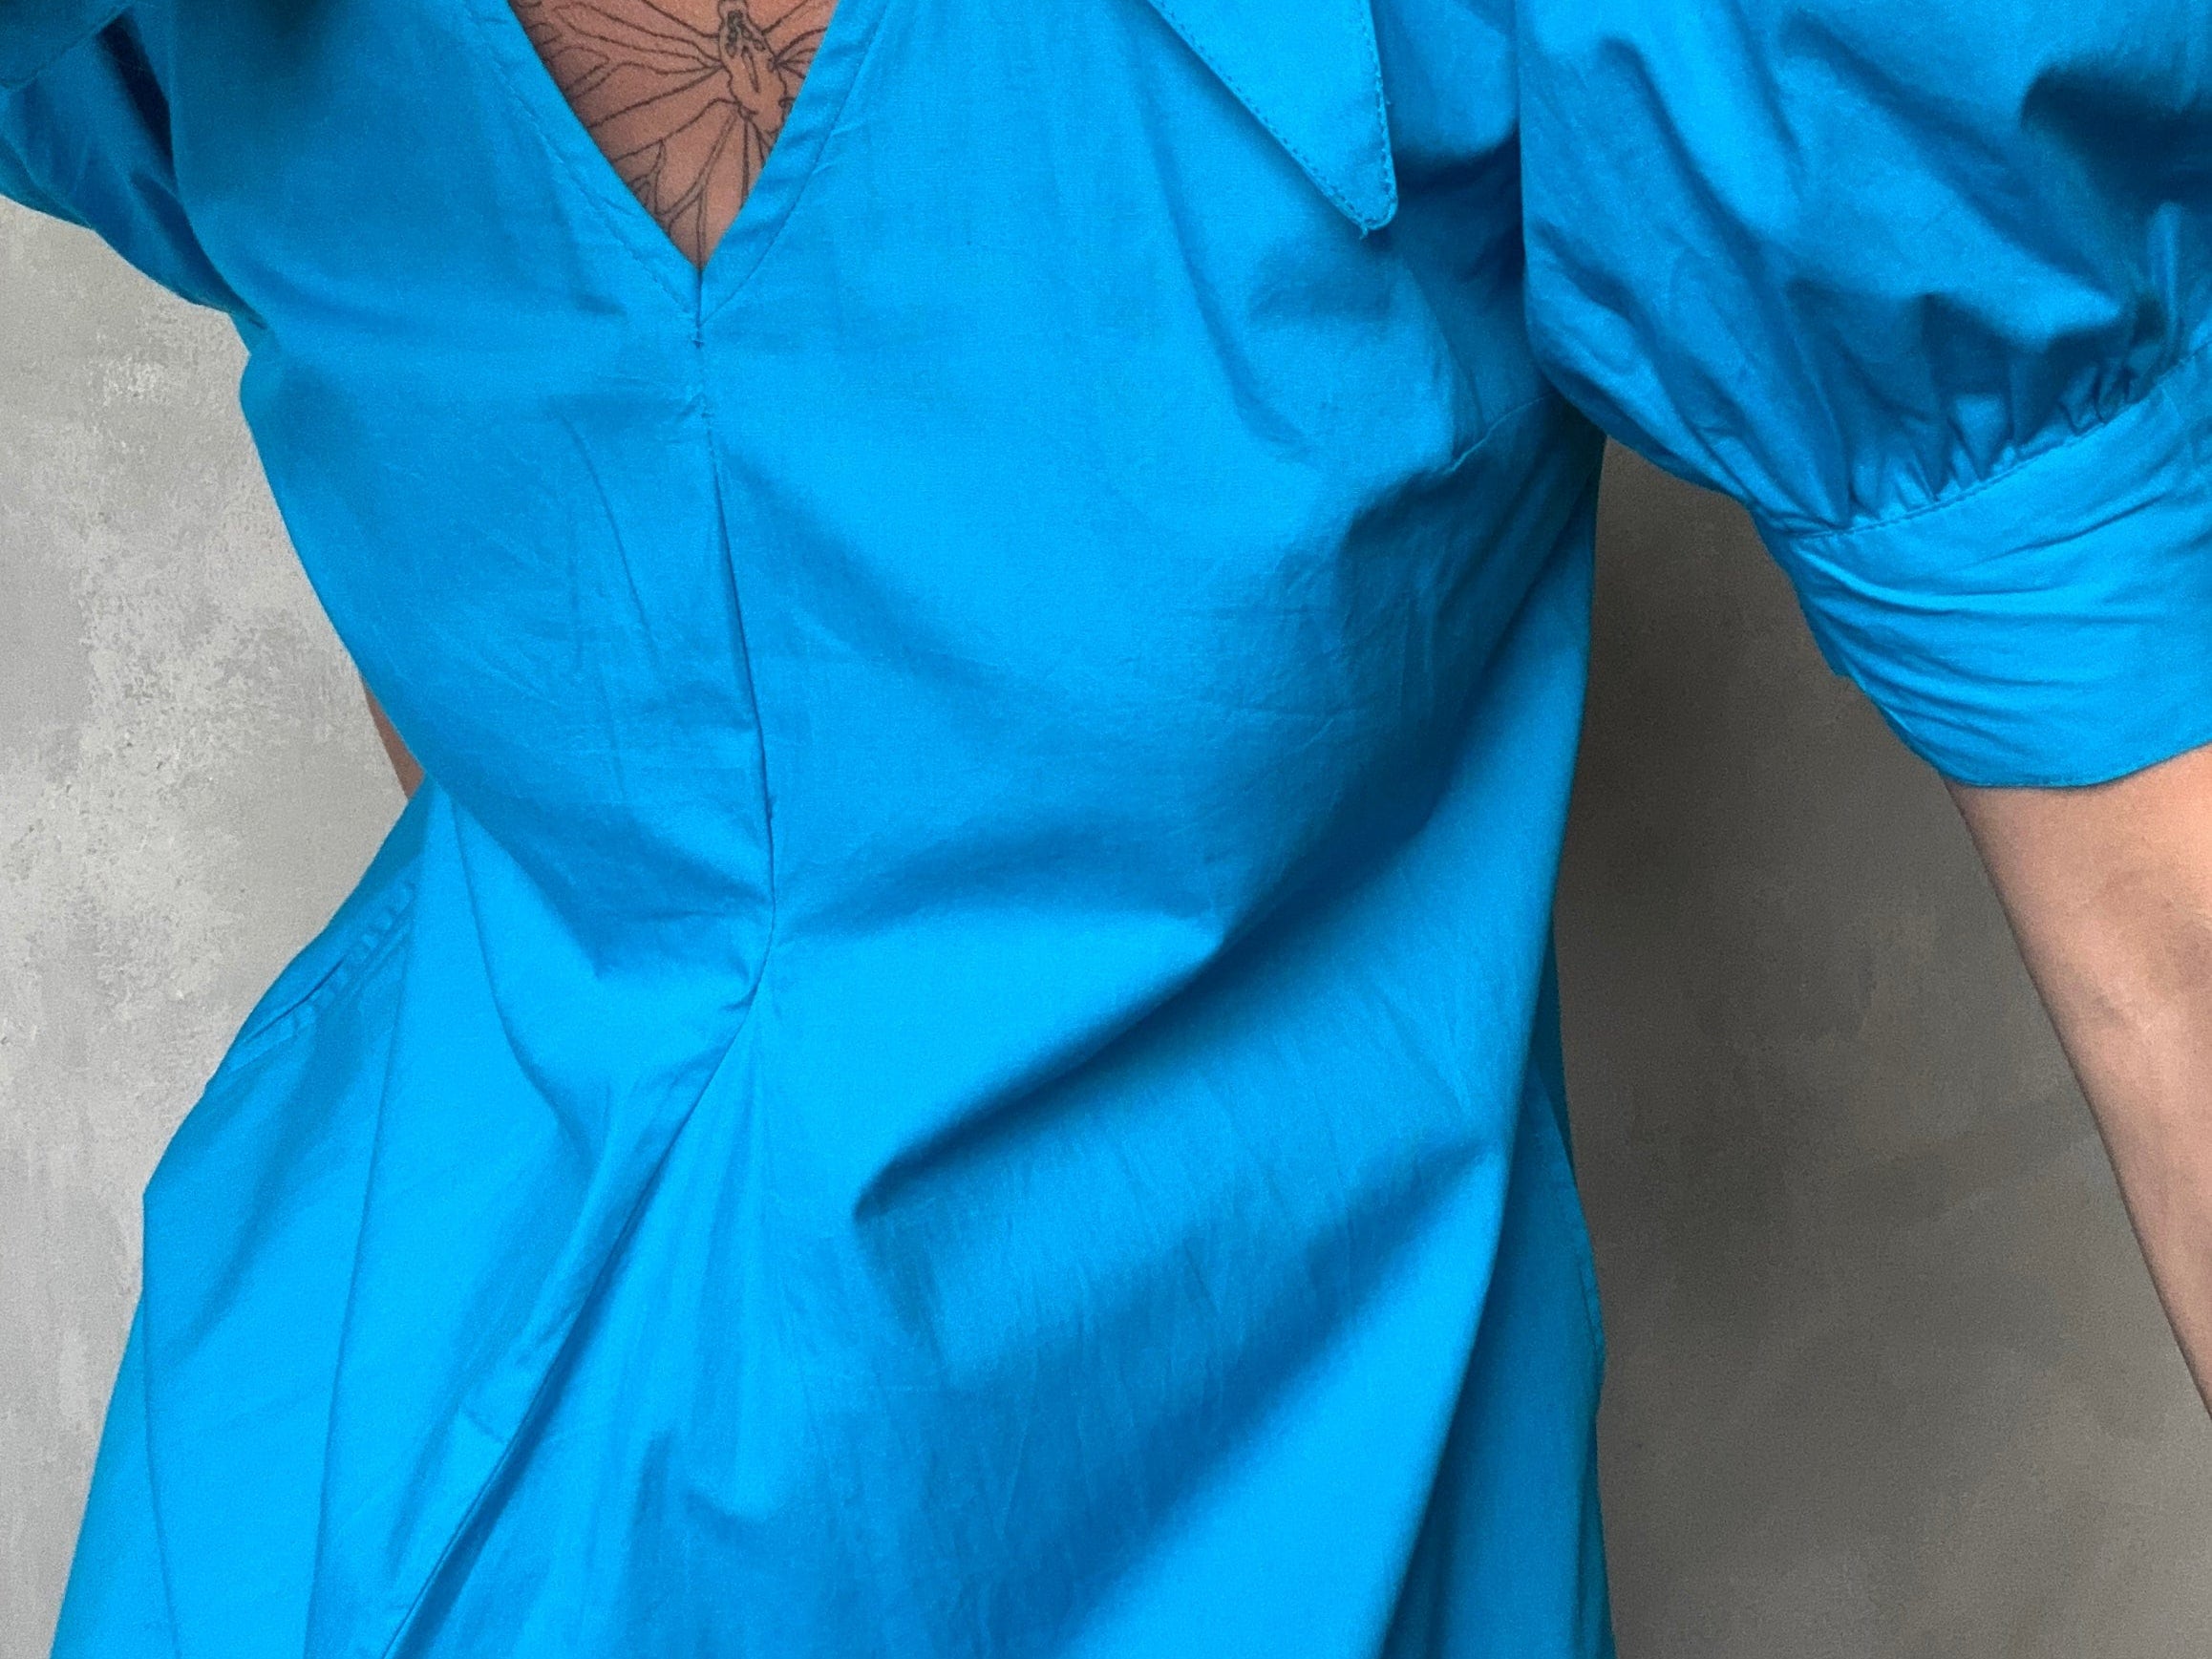 Ganni Ganni Collar Dress Blue